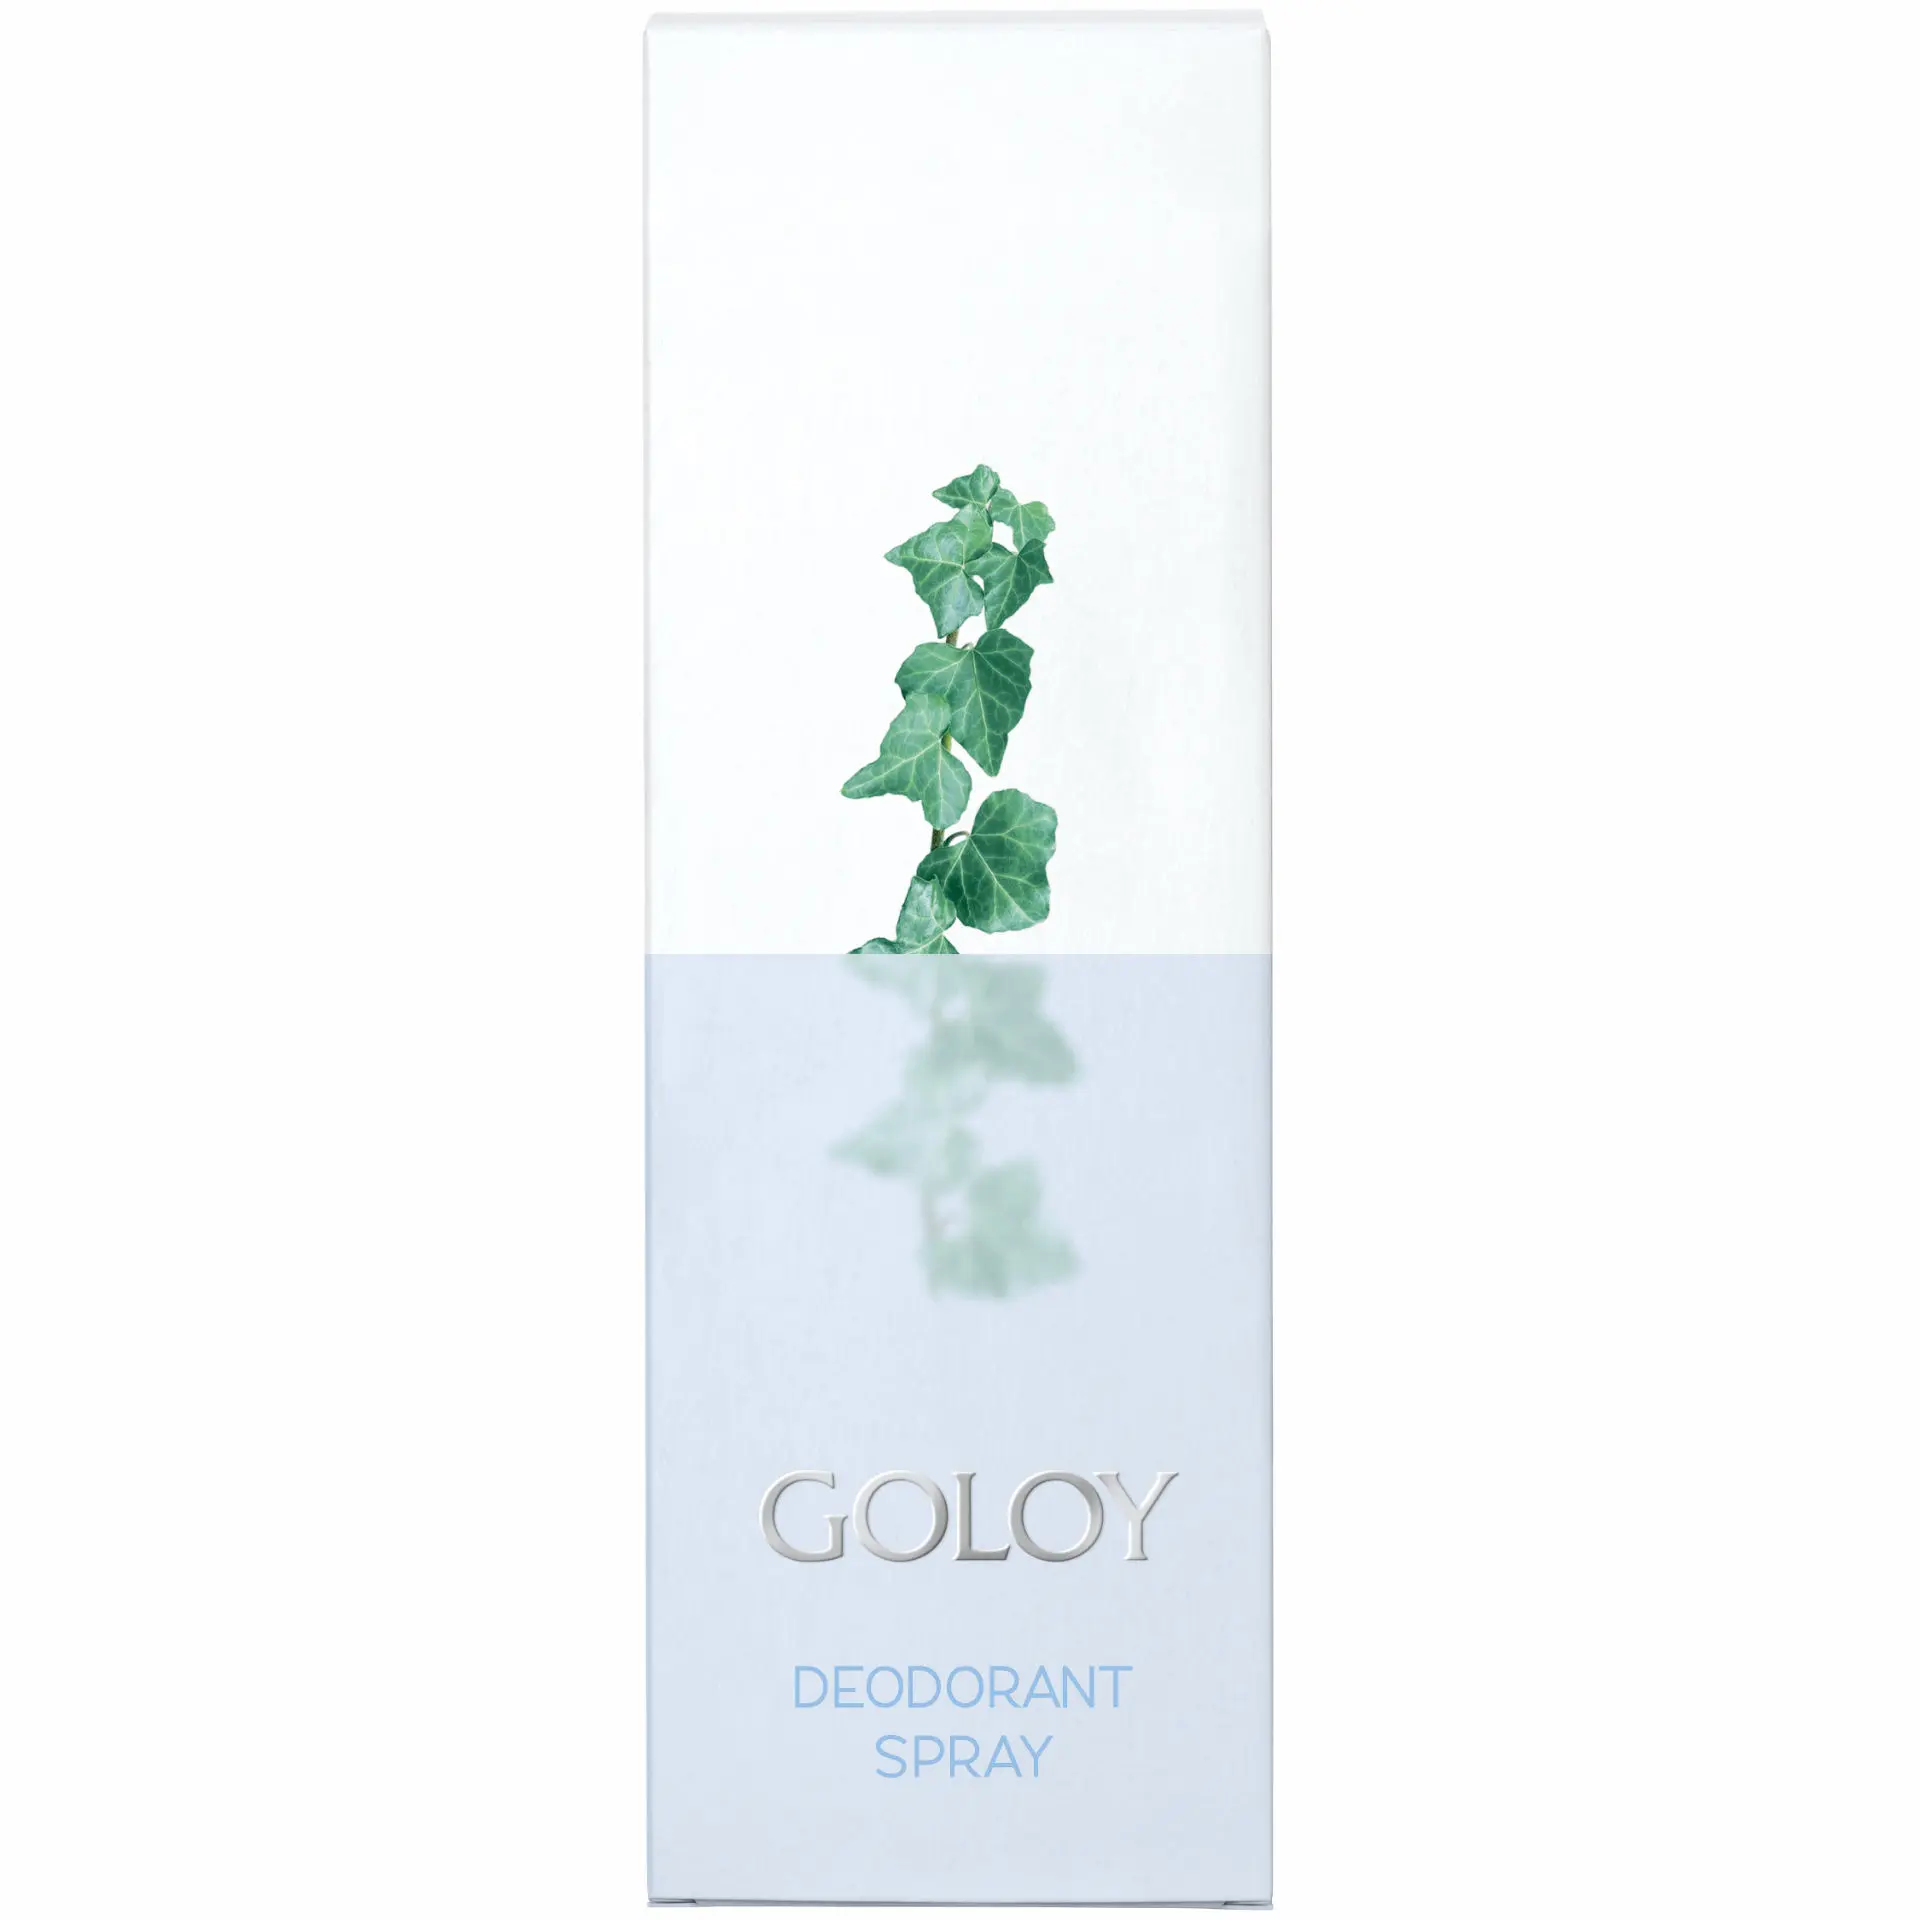 Goloy Deodorant Spray